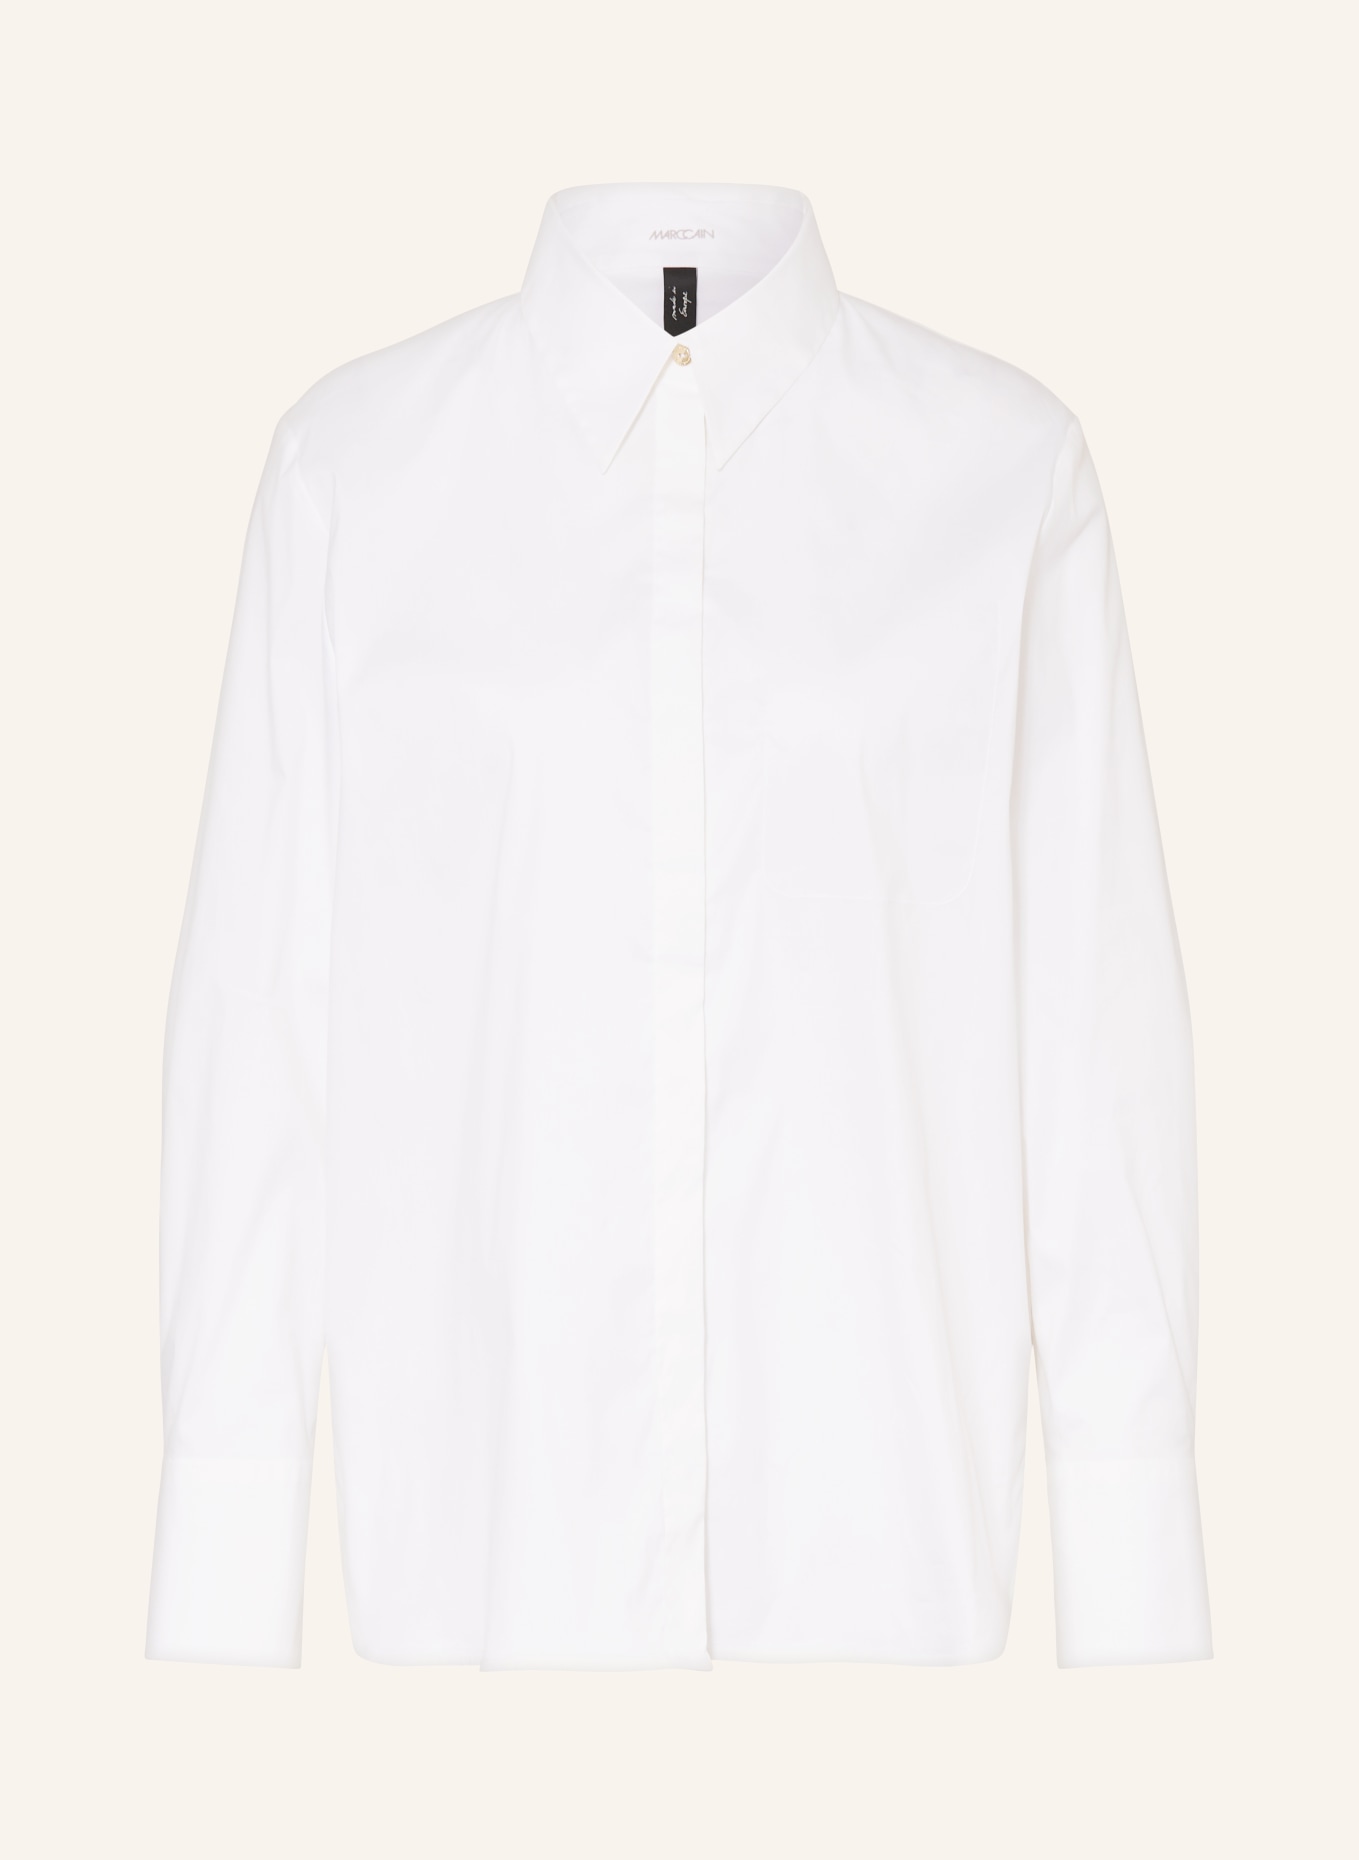 MARC CAIN Hemdbluse, Farbe: 100 WHITE (Bild 1)